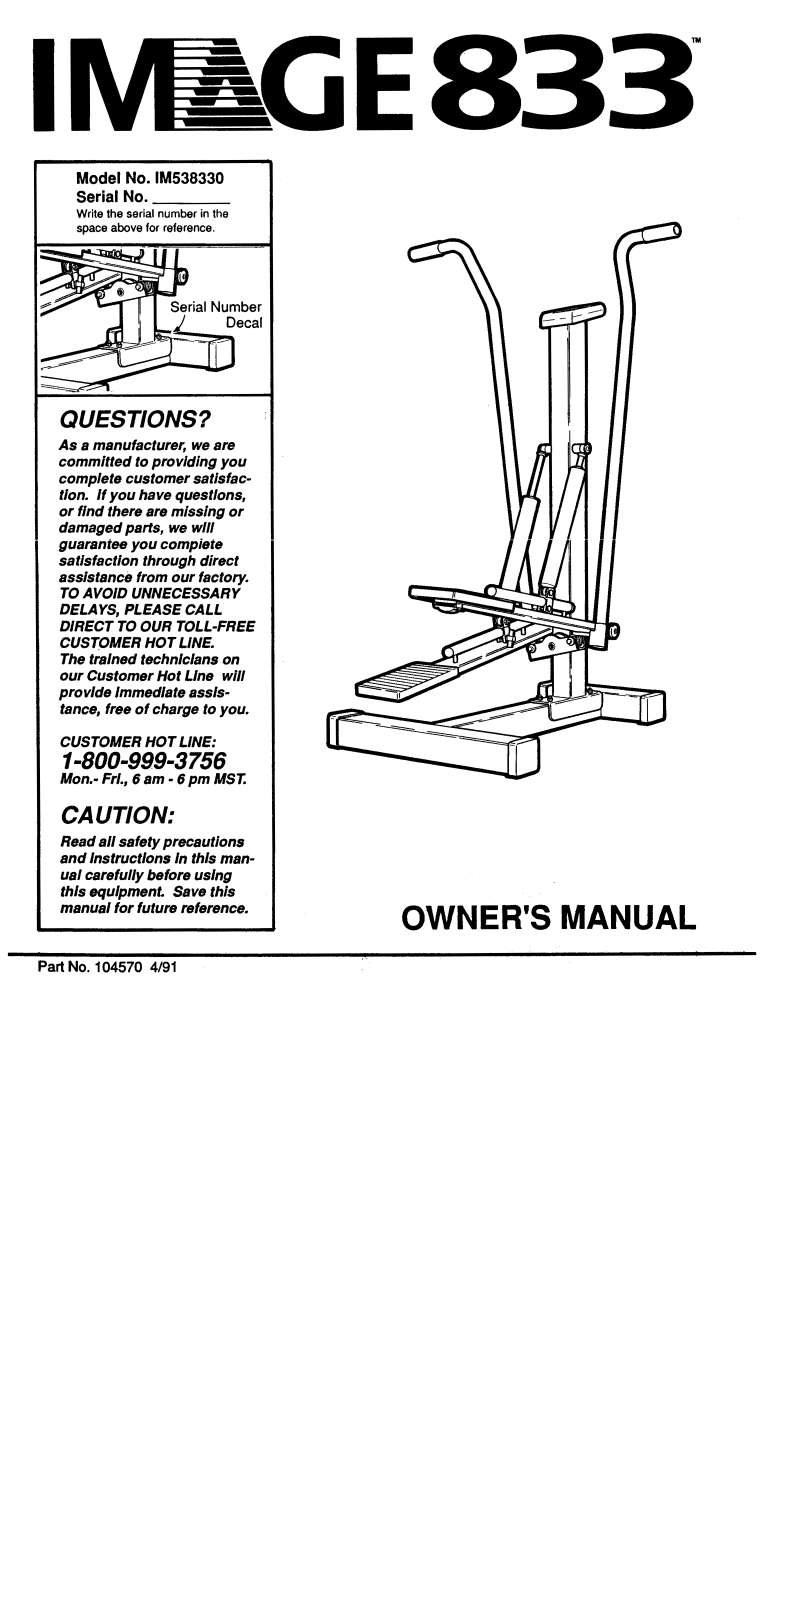 Image IM538330 Owner's Manual